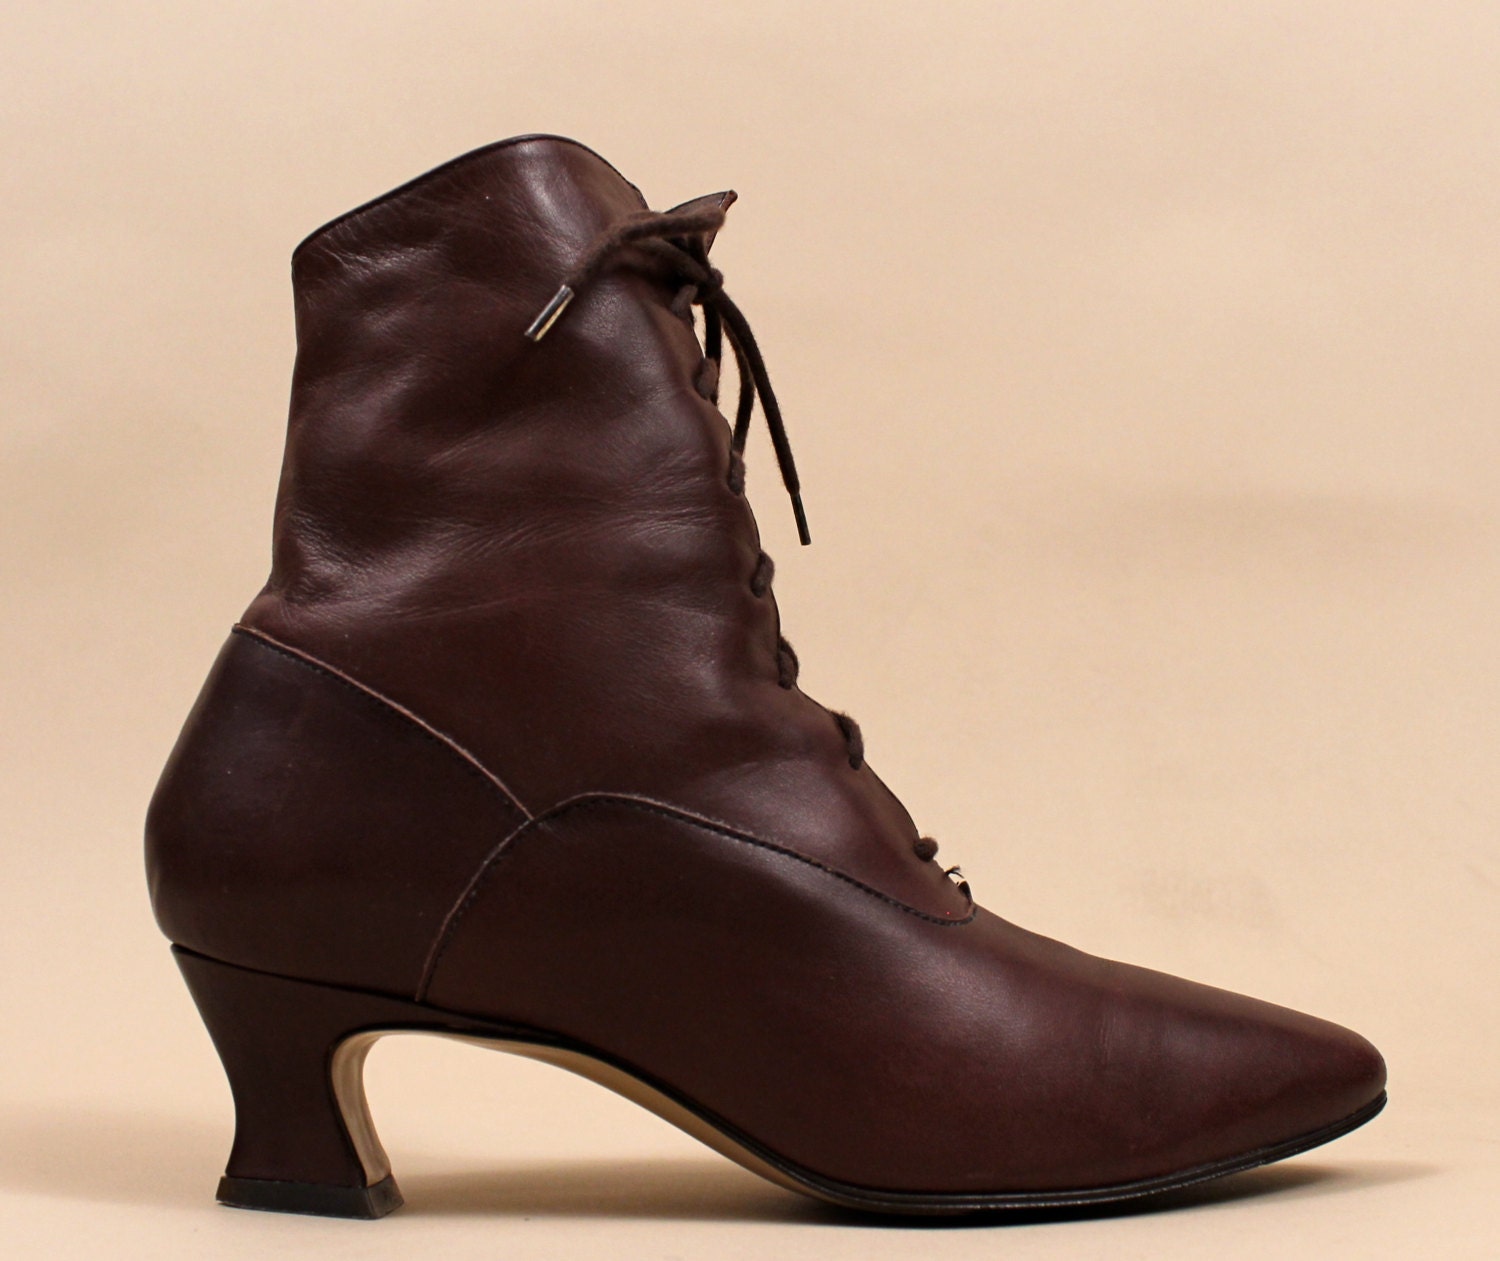 80s Vtg Brown LEATHER Ankle Granny Boots / Sculptural Coffin Heel / Neo Victorian Boho Western Roper/ Sz 6.5 / Euro 36.5 - 37 - nanometer